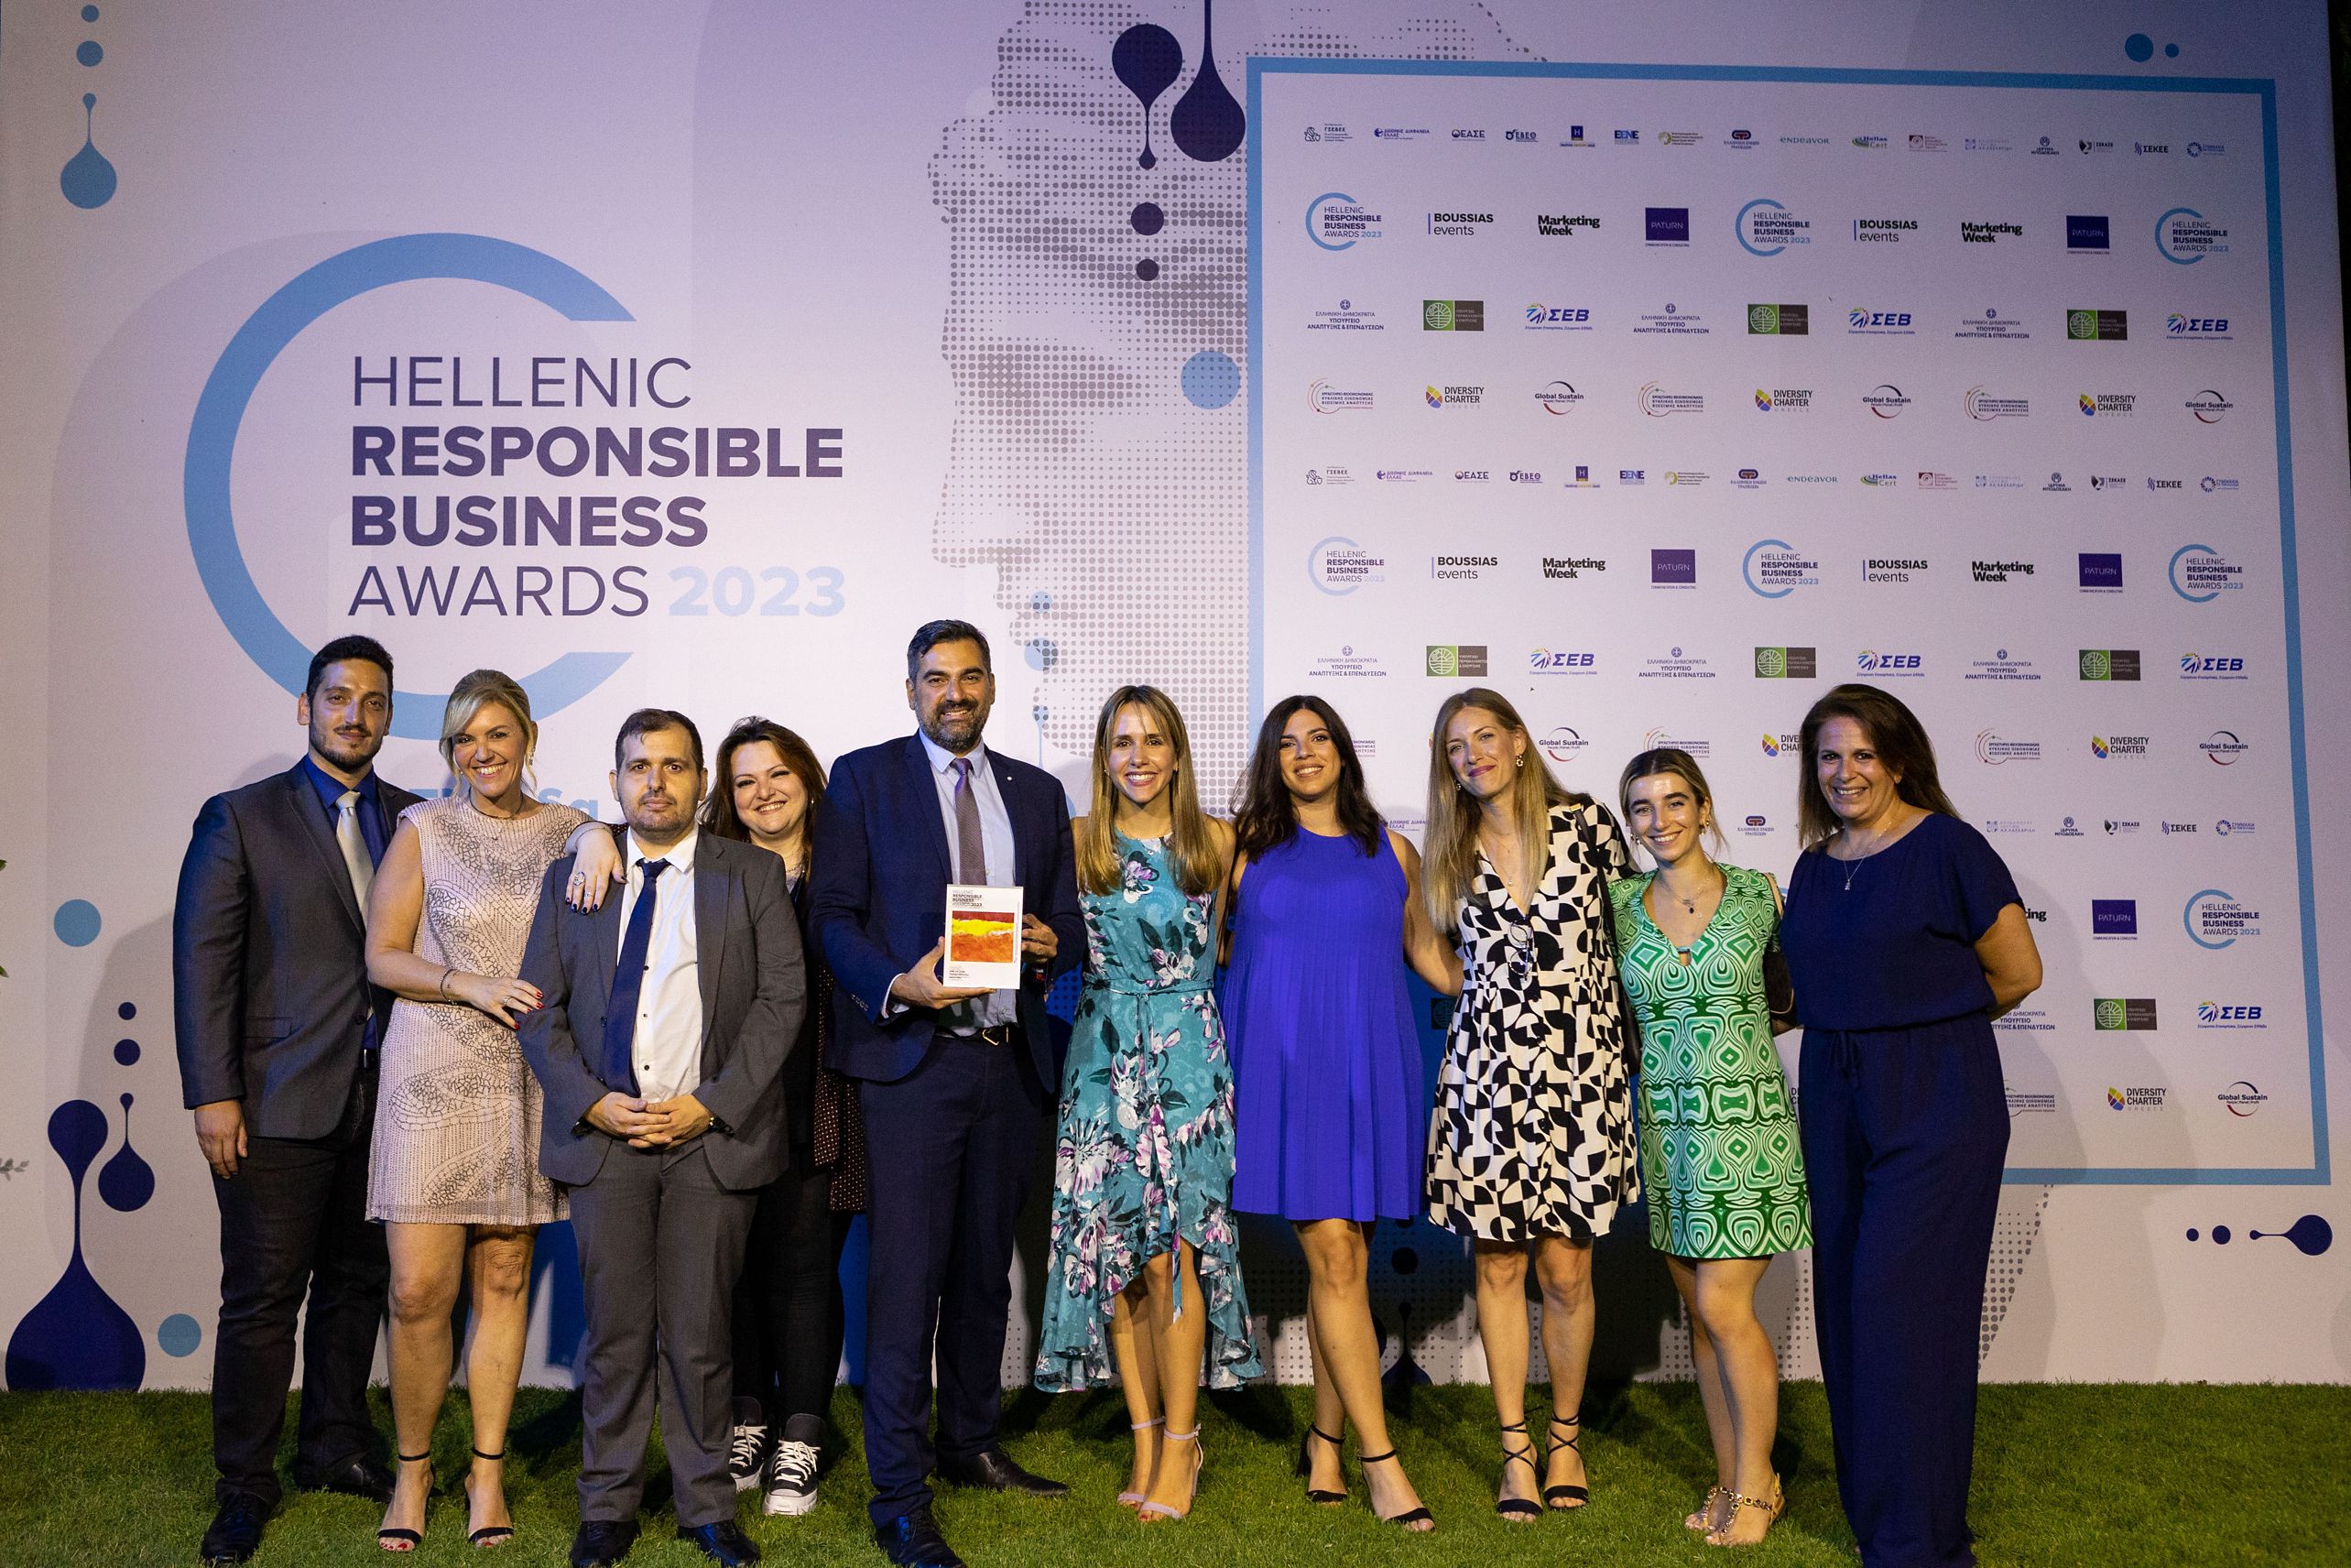 kpmg marketing team at hellenic responsible business awards 2023